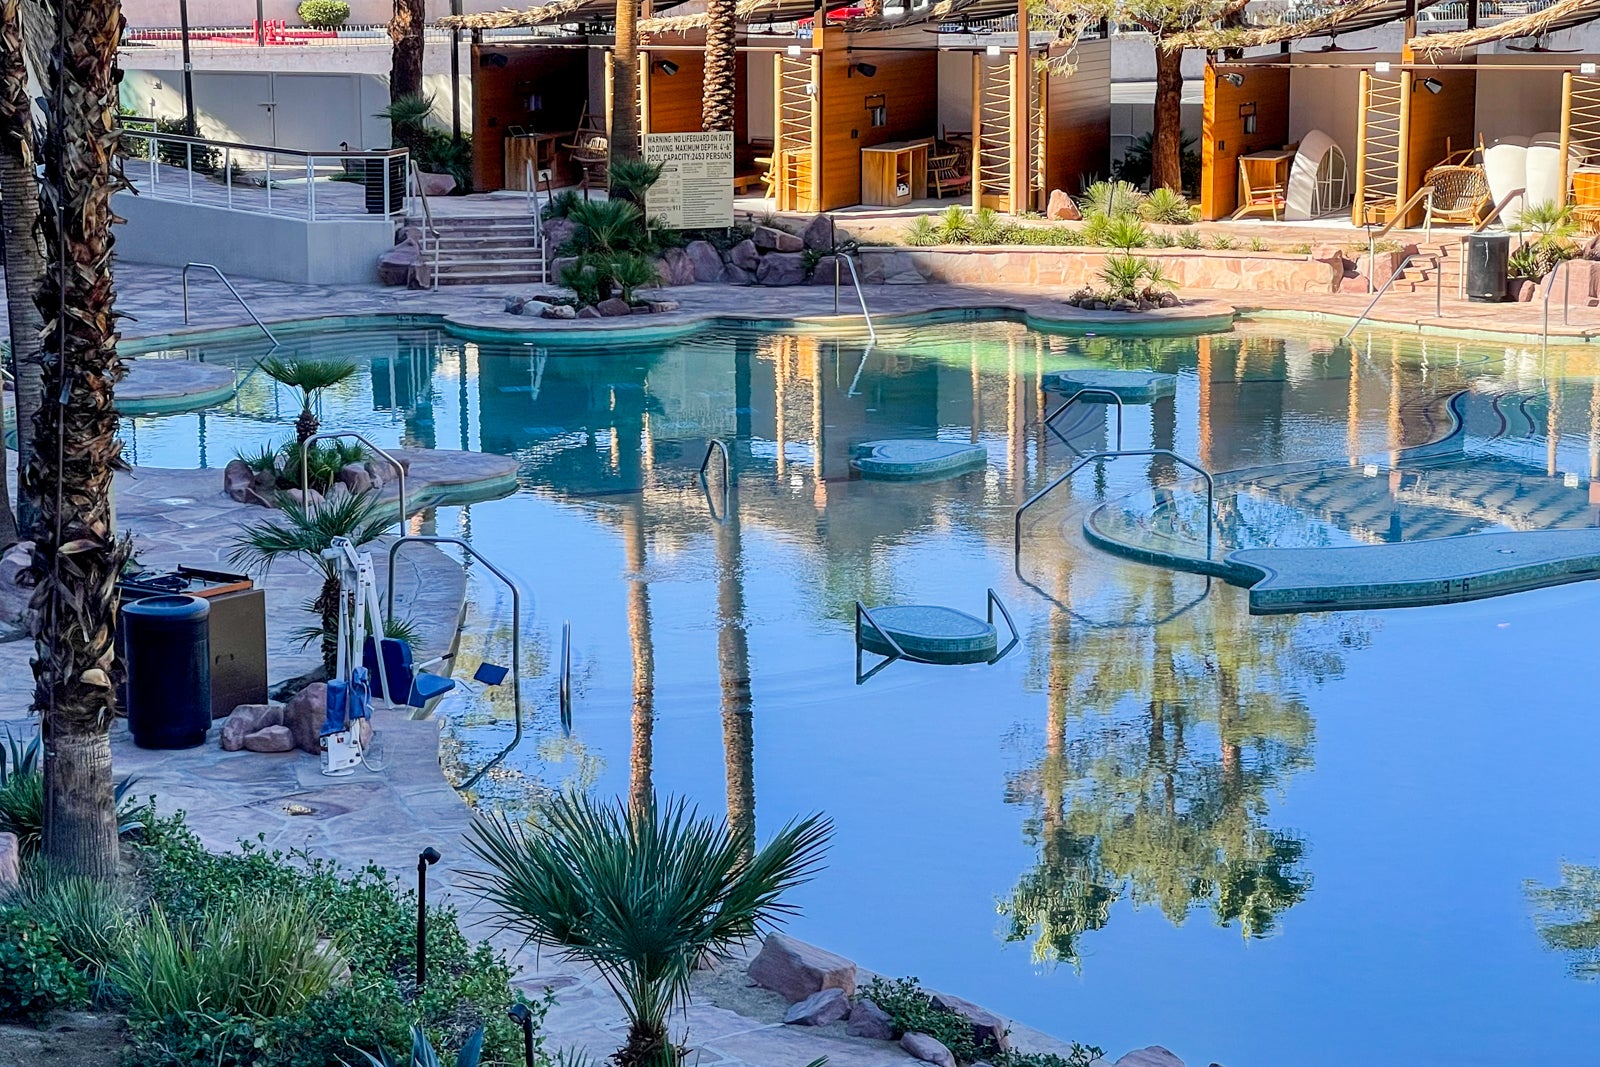 Check out Virgin Hotels Las Vegas' new pool paradise Élia Beach